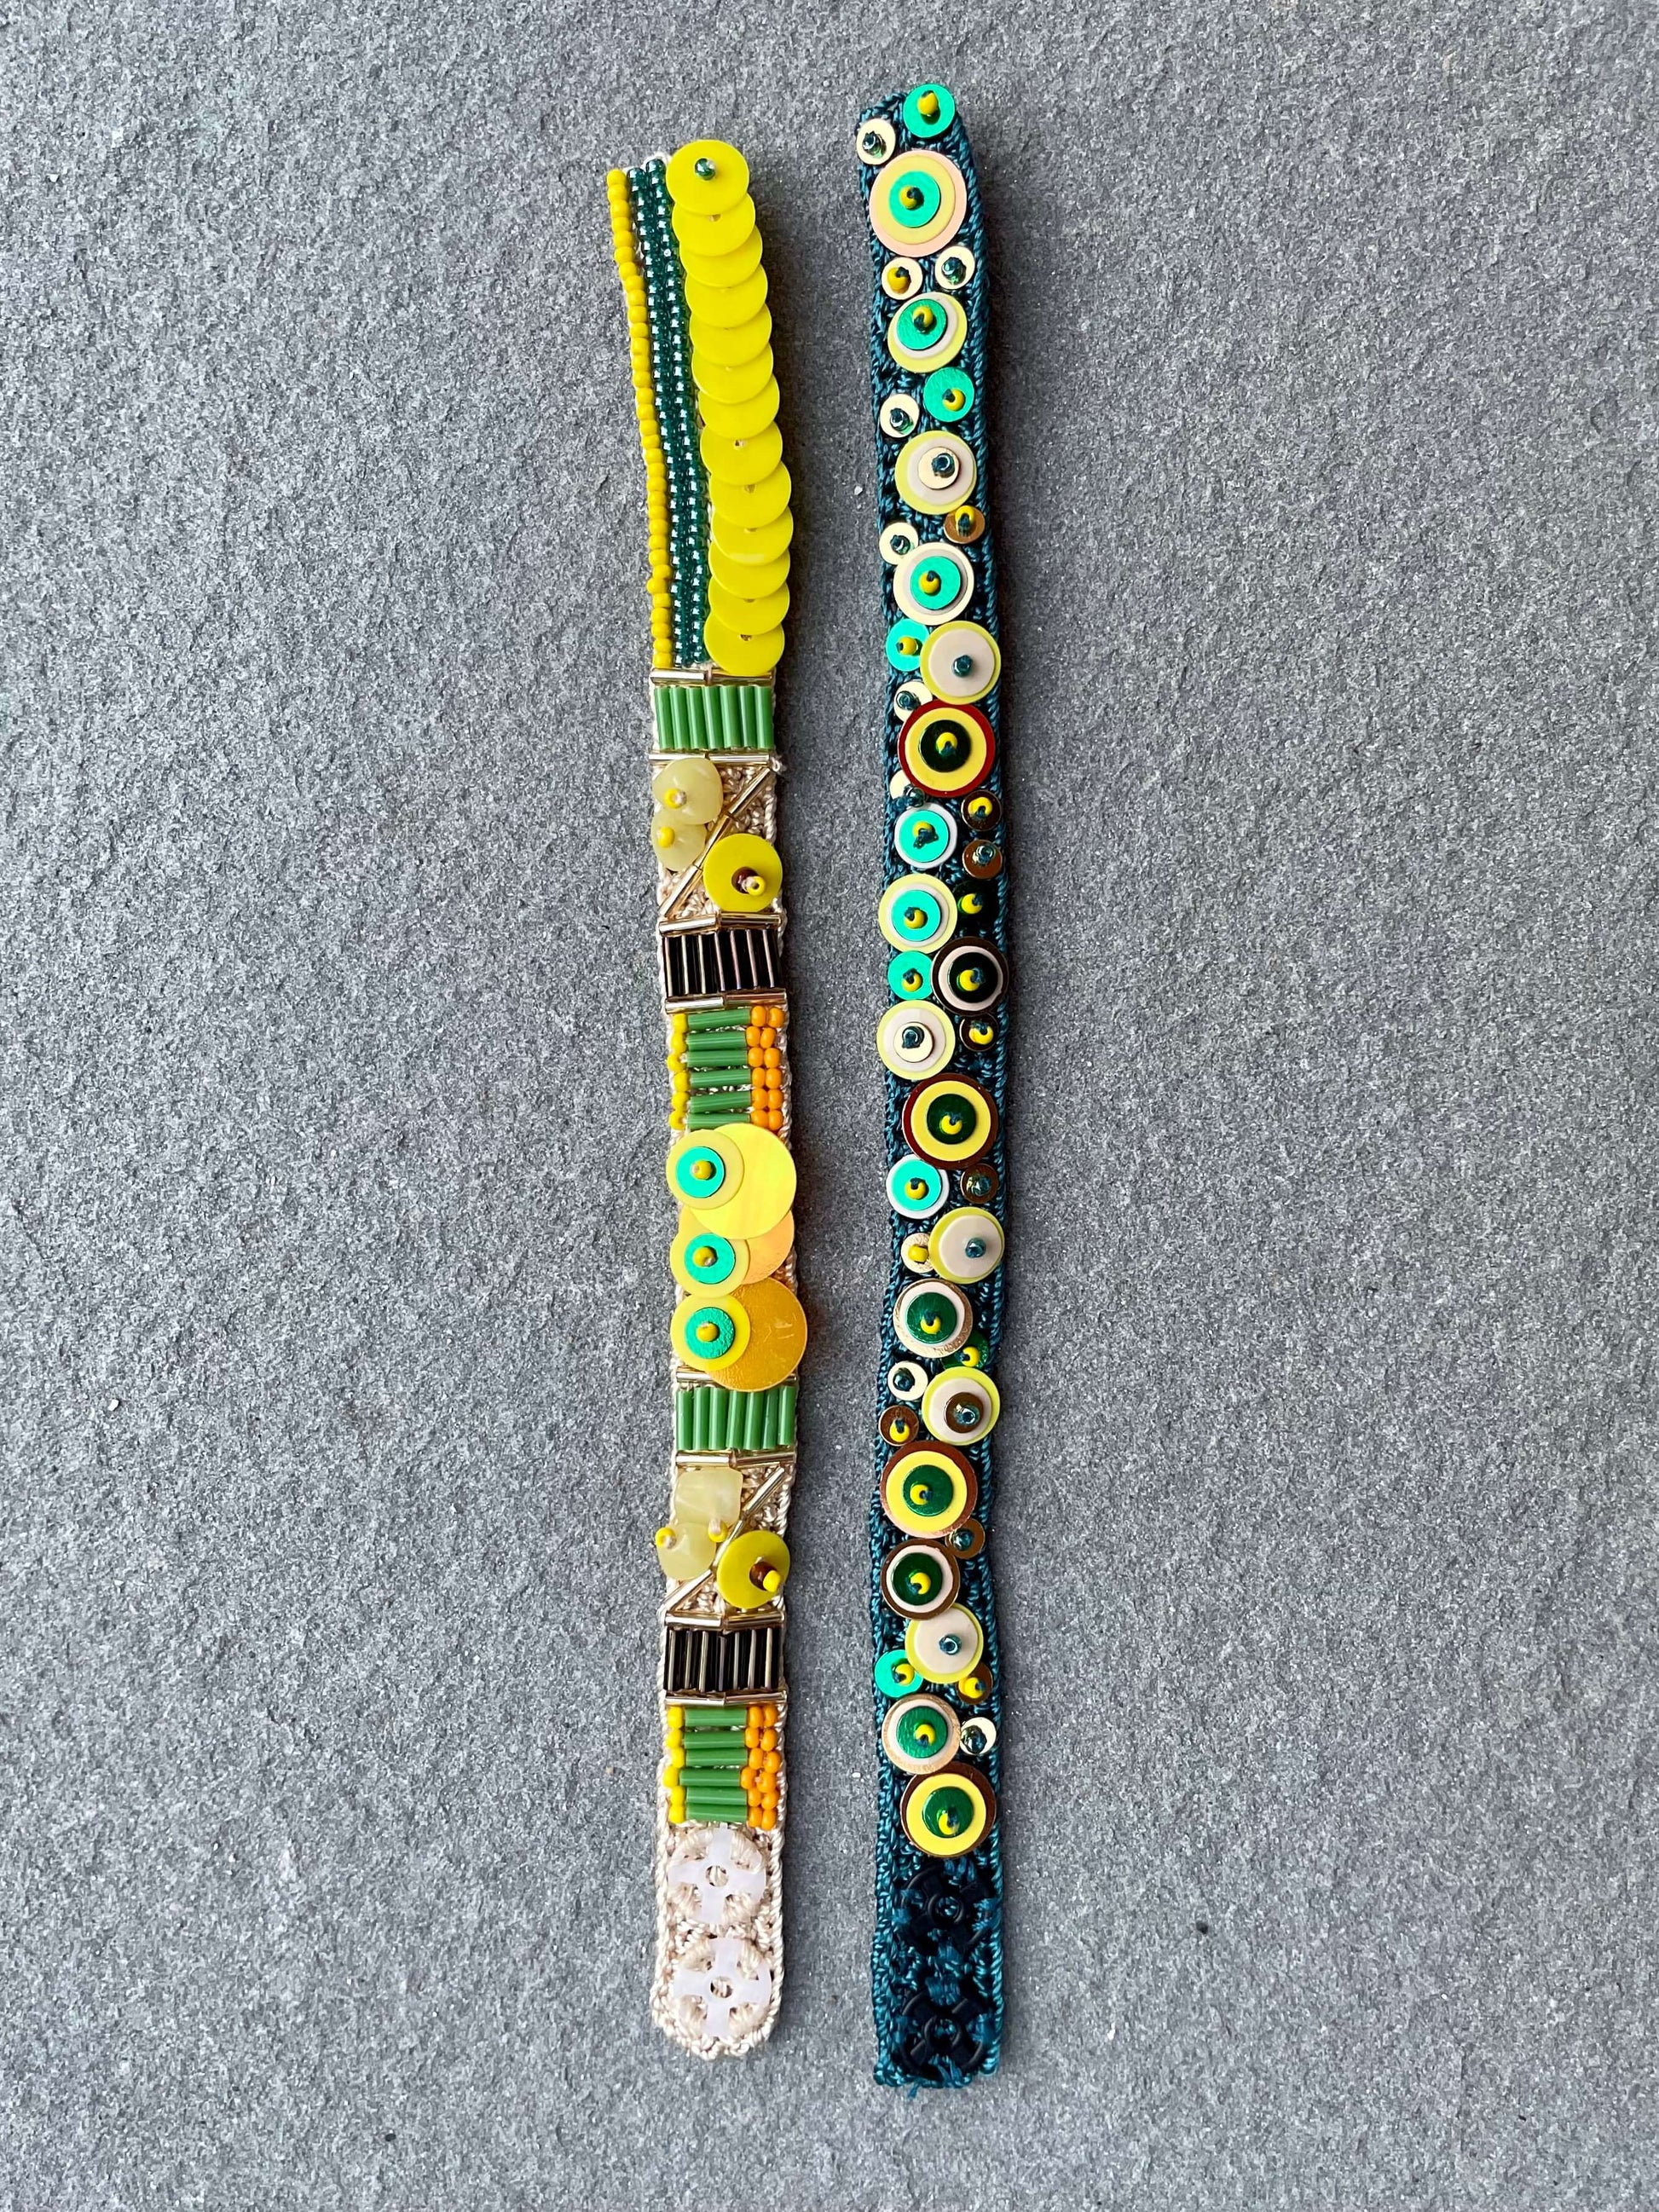 2 Sets Colorful Beads Friendship Bracelets